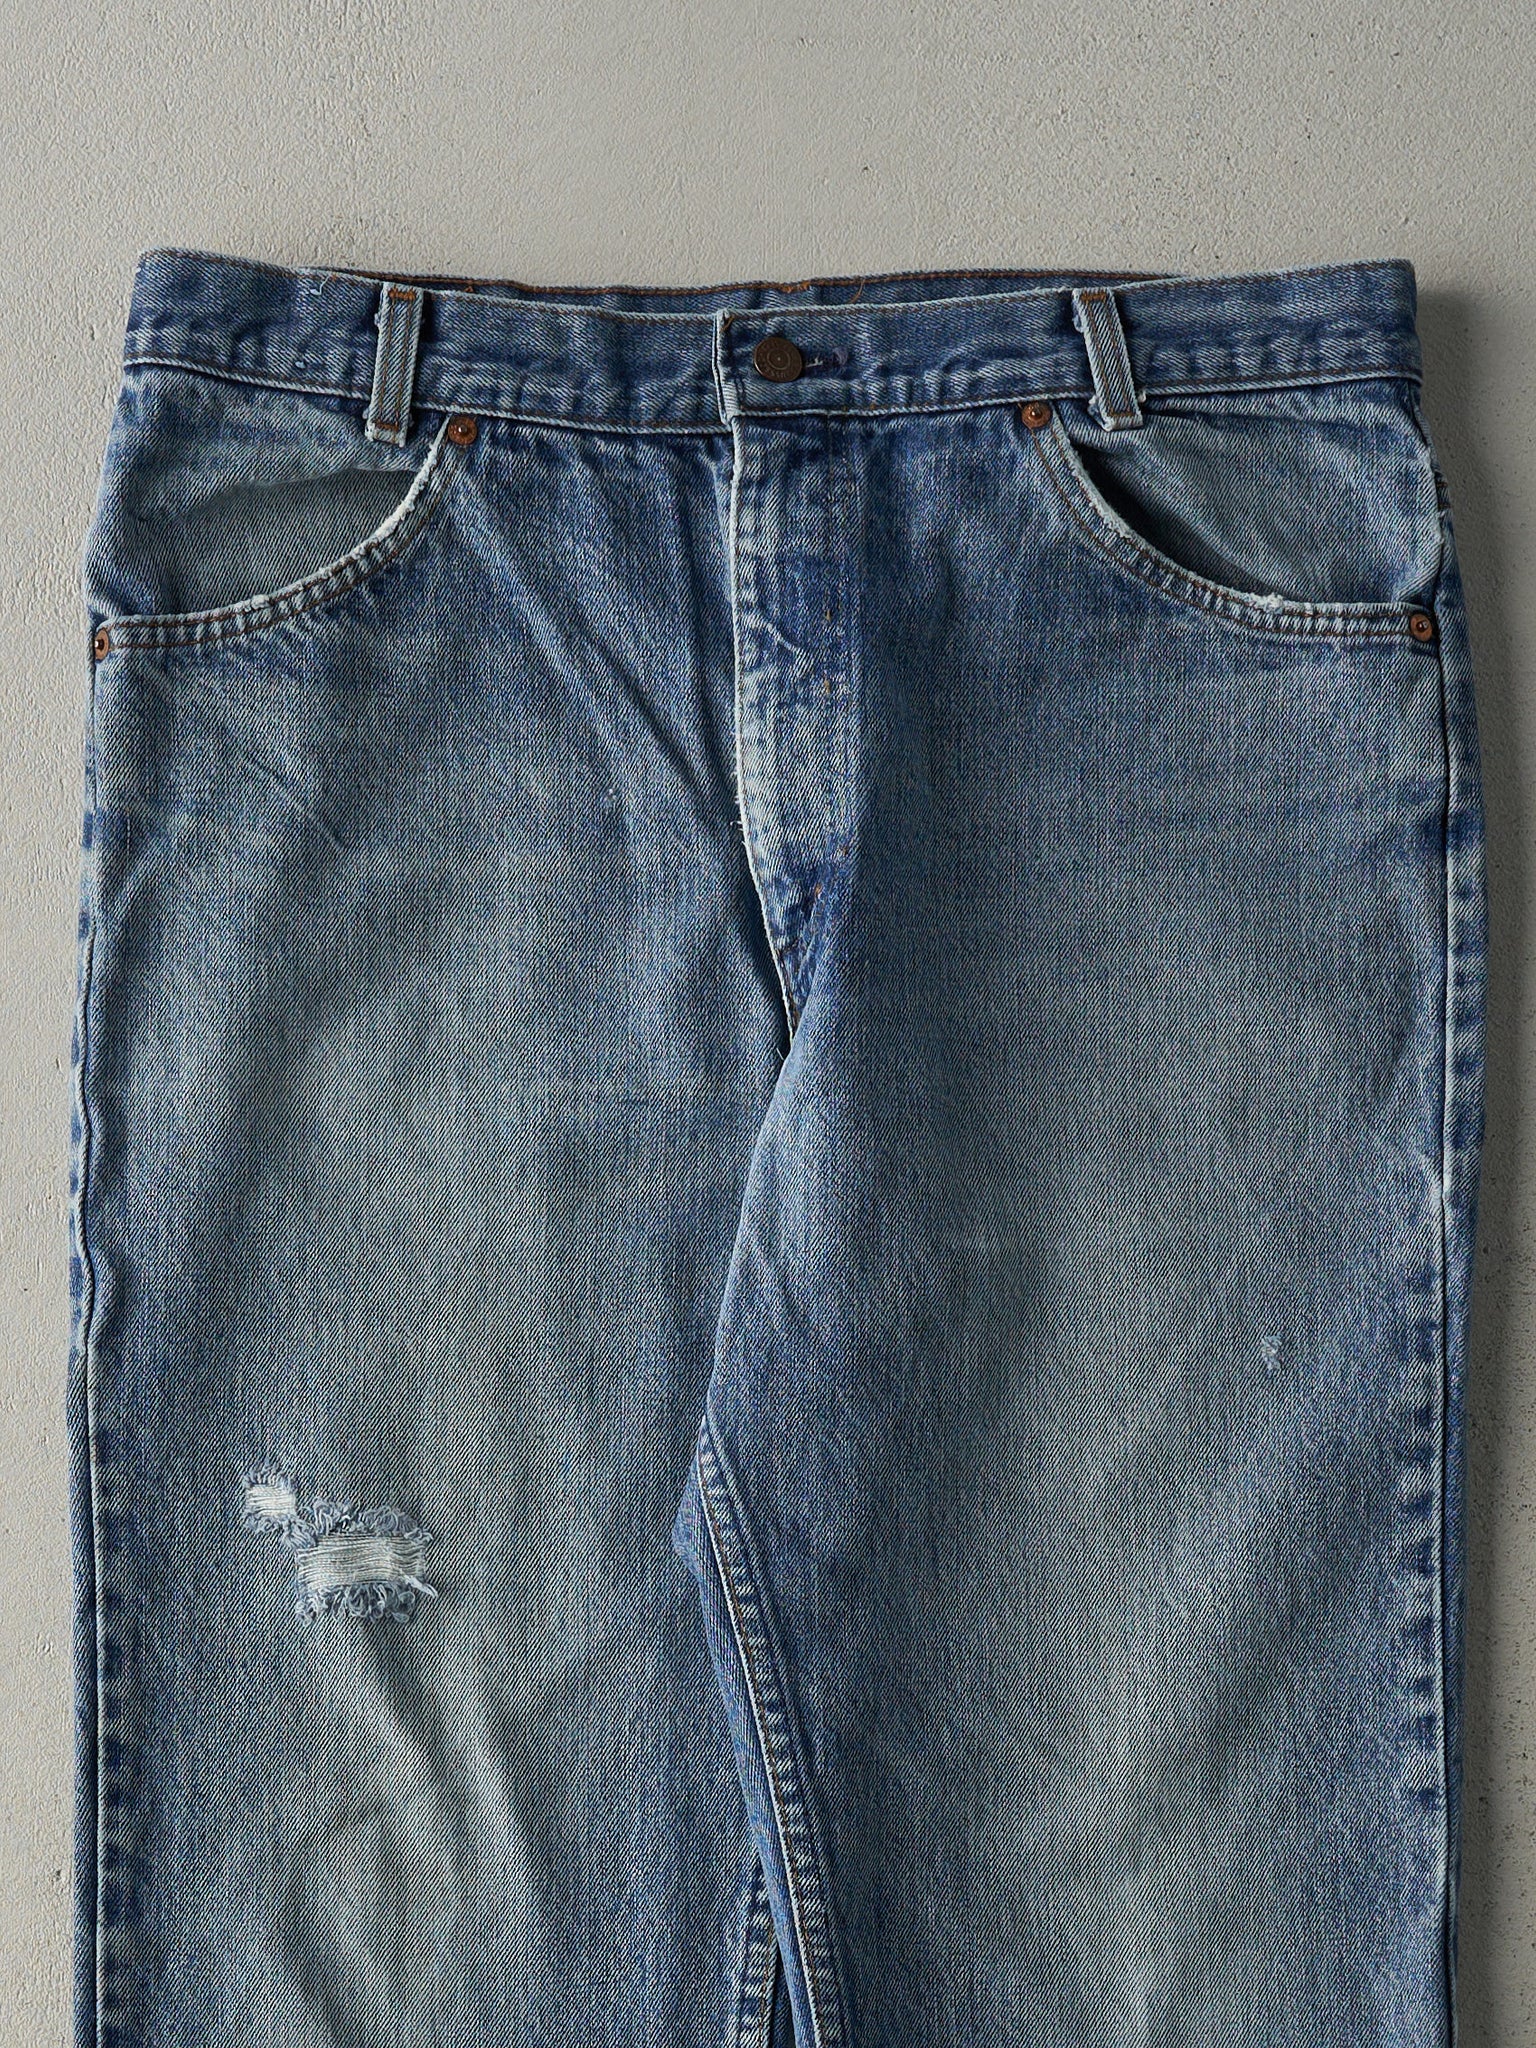 Vintage 80s Light Wash Levi's Orange Tab Released Hem Jeans (34x29)